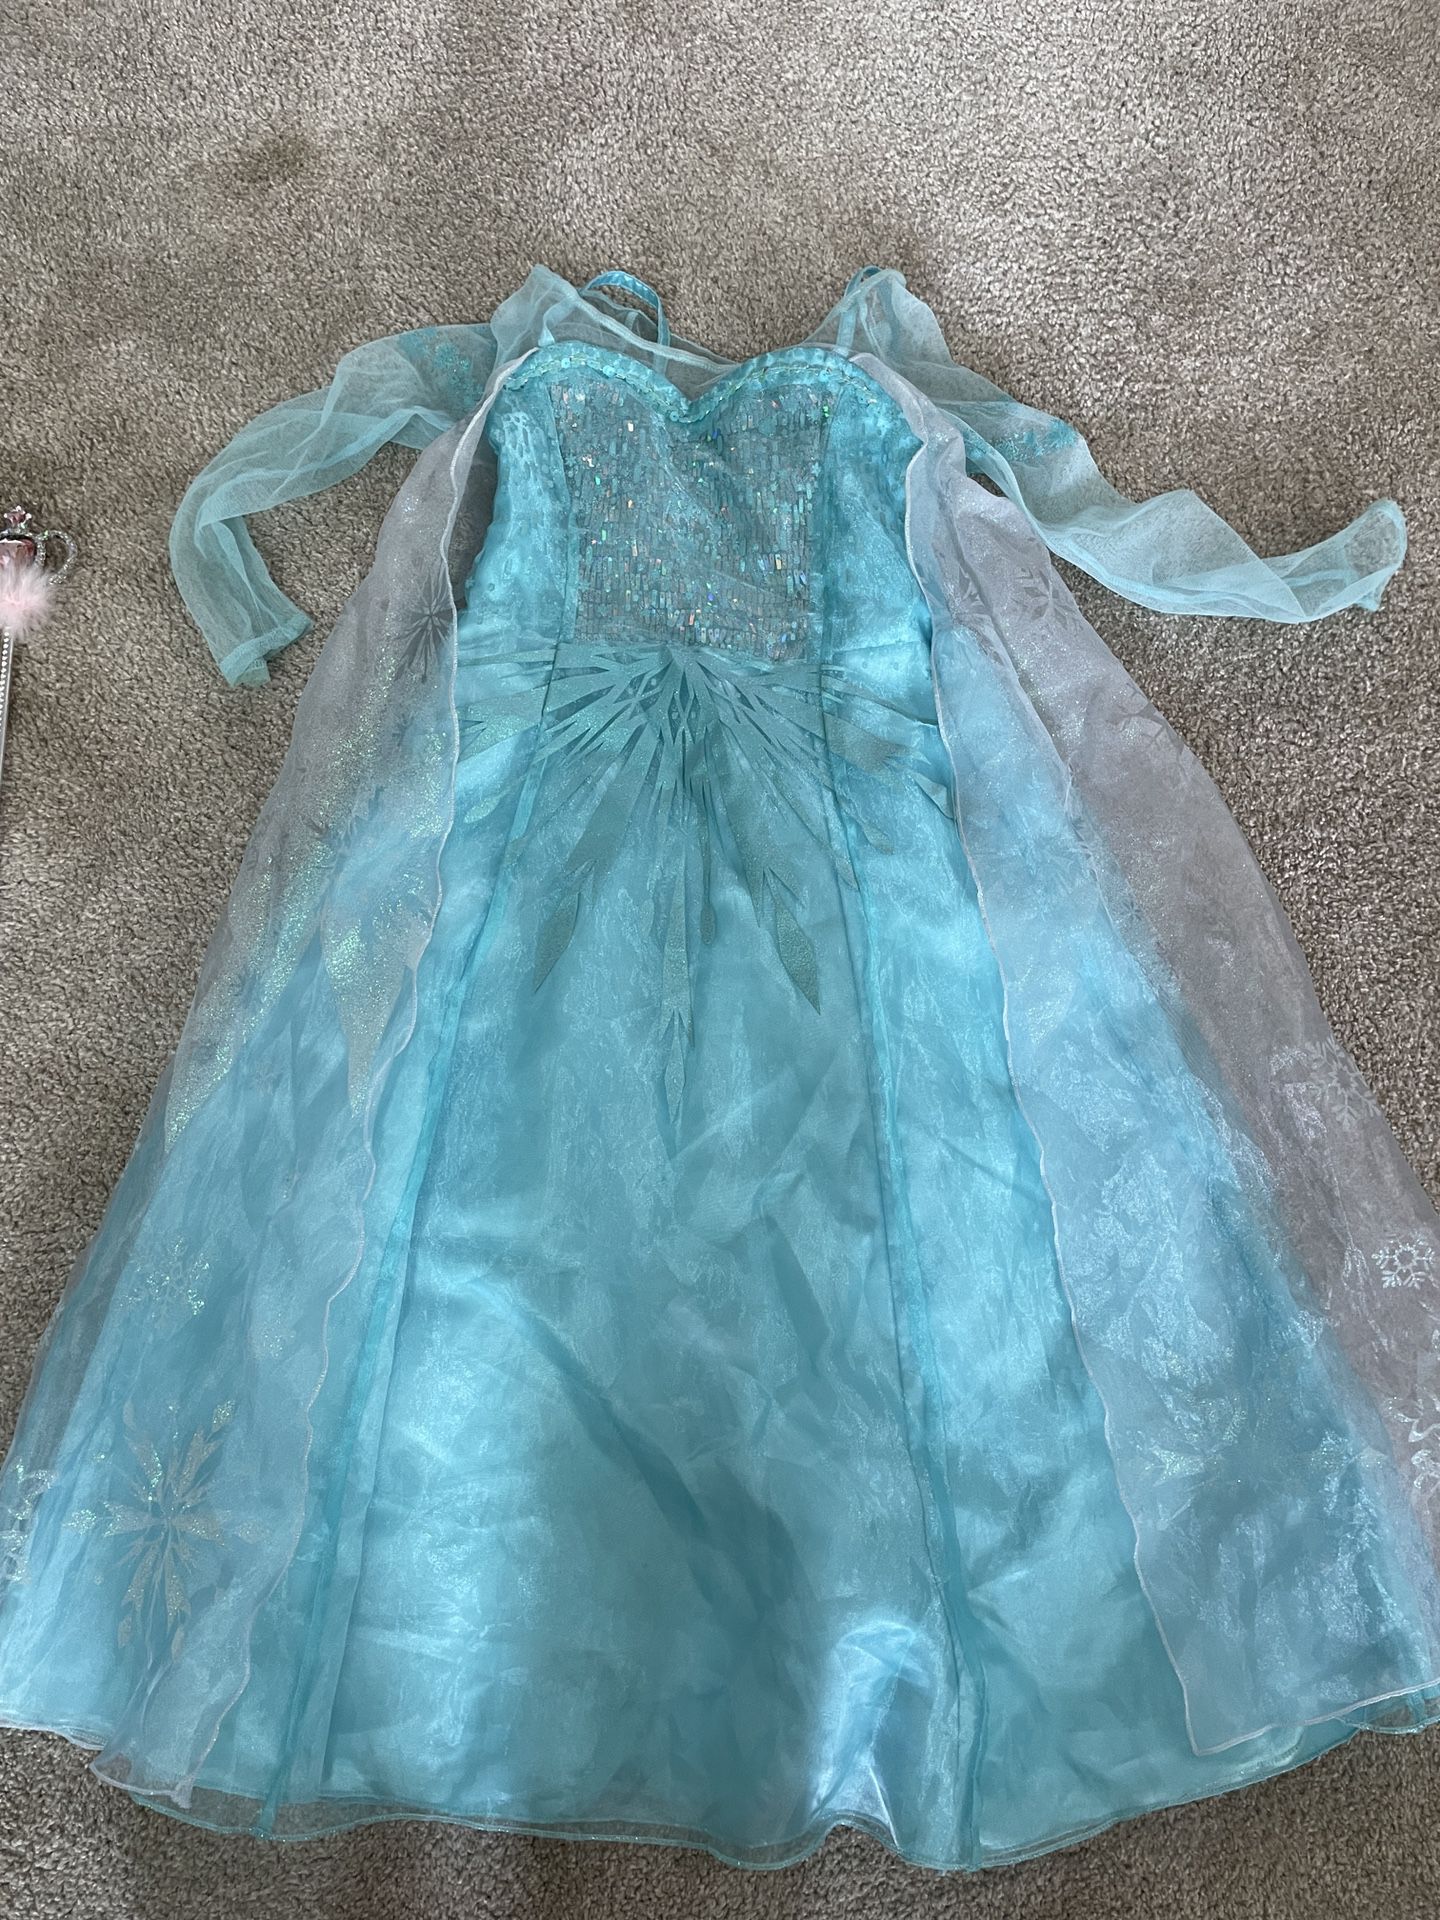 Disney Girls Elsa Costume/Dress- Size 7/8